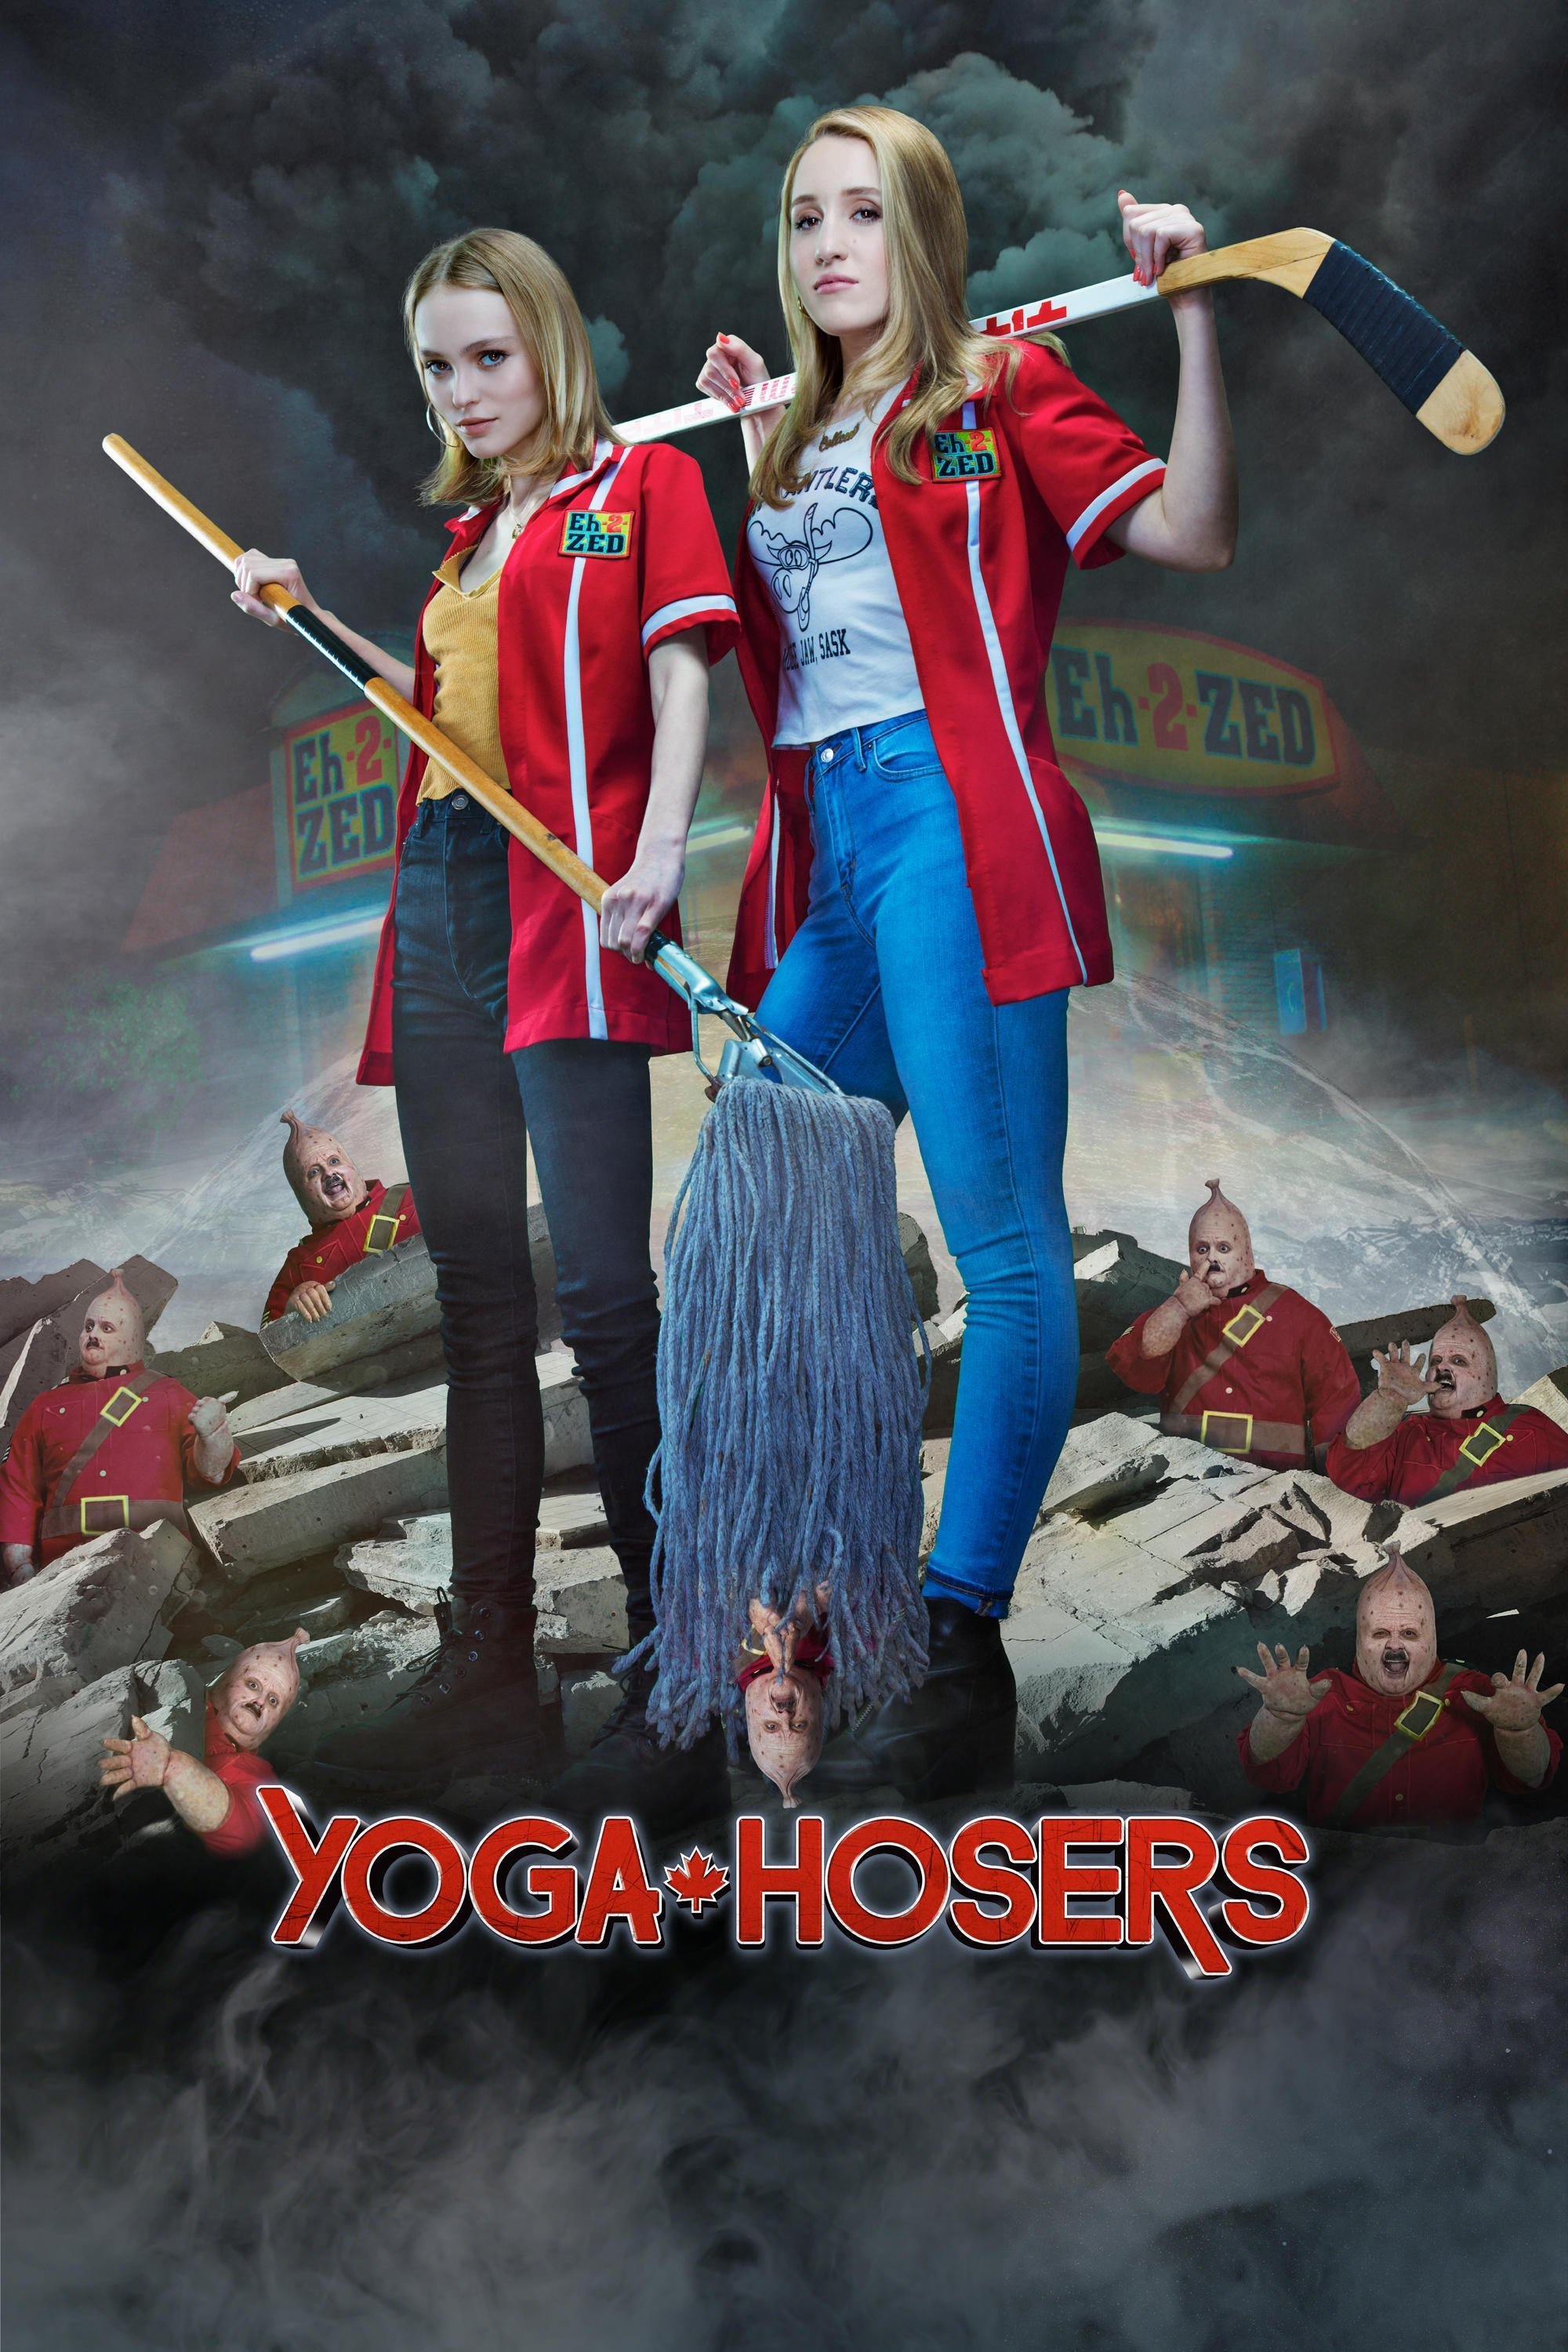 Plakat von "Yoga Hosers"